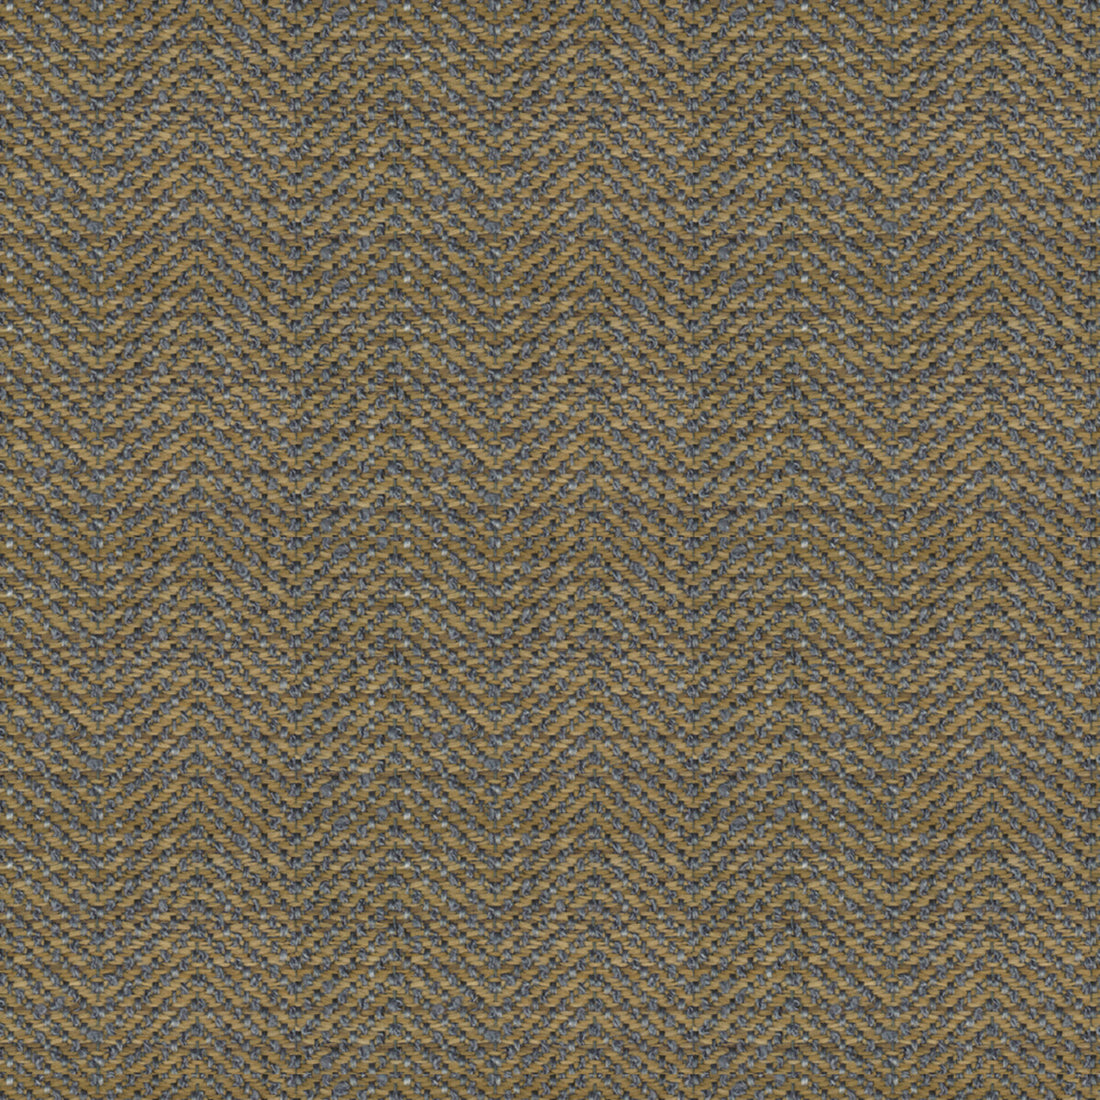 Kravet Smart fabric in 30666-35 color - pattern 30666.35.0 - by Kravet Smart